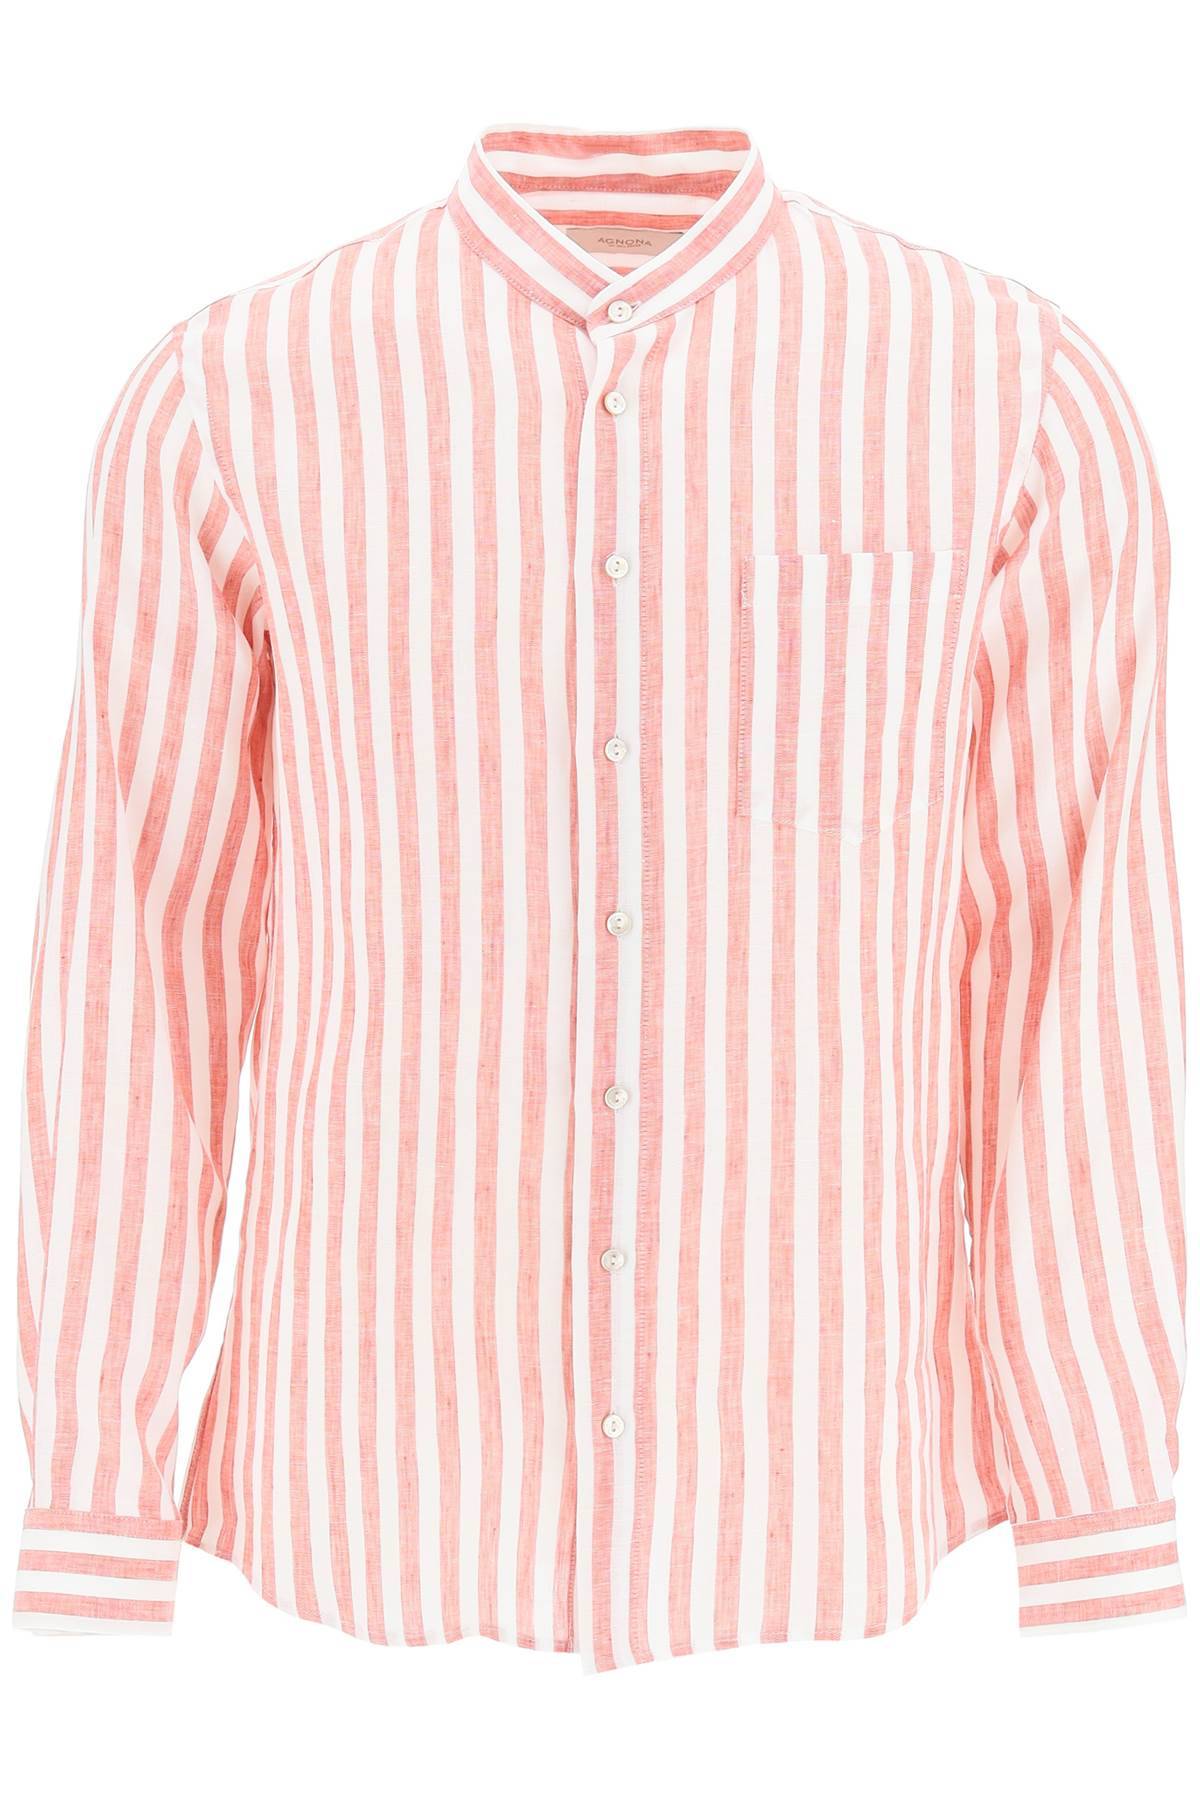 AGNONA AGNONA striped linen shirt